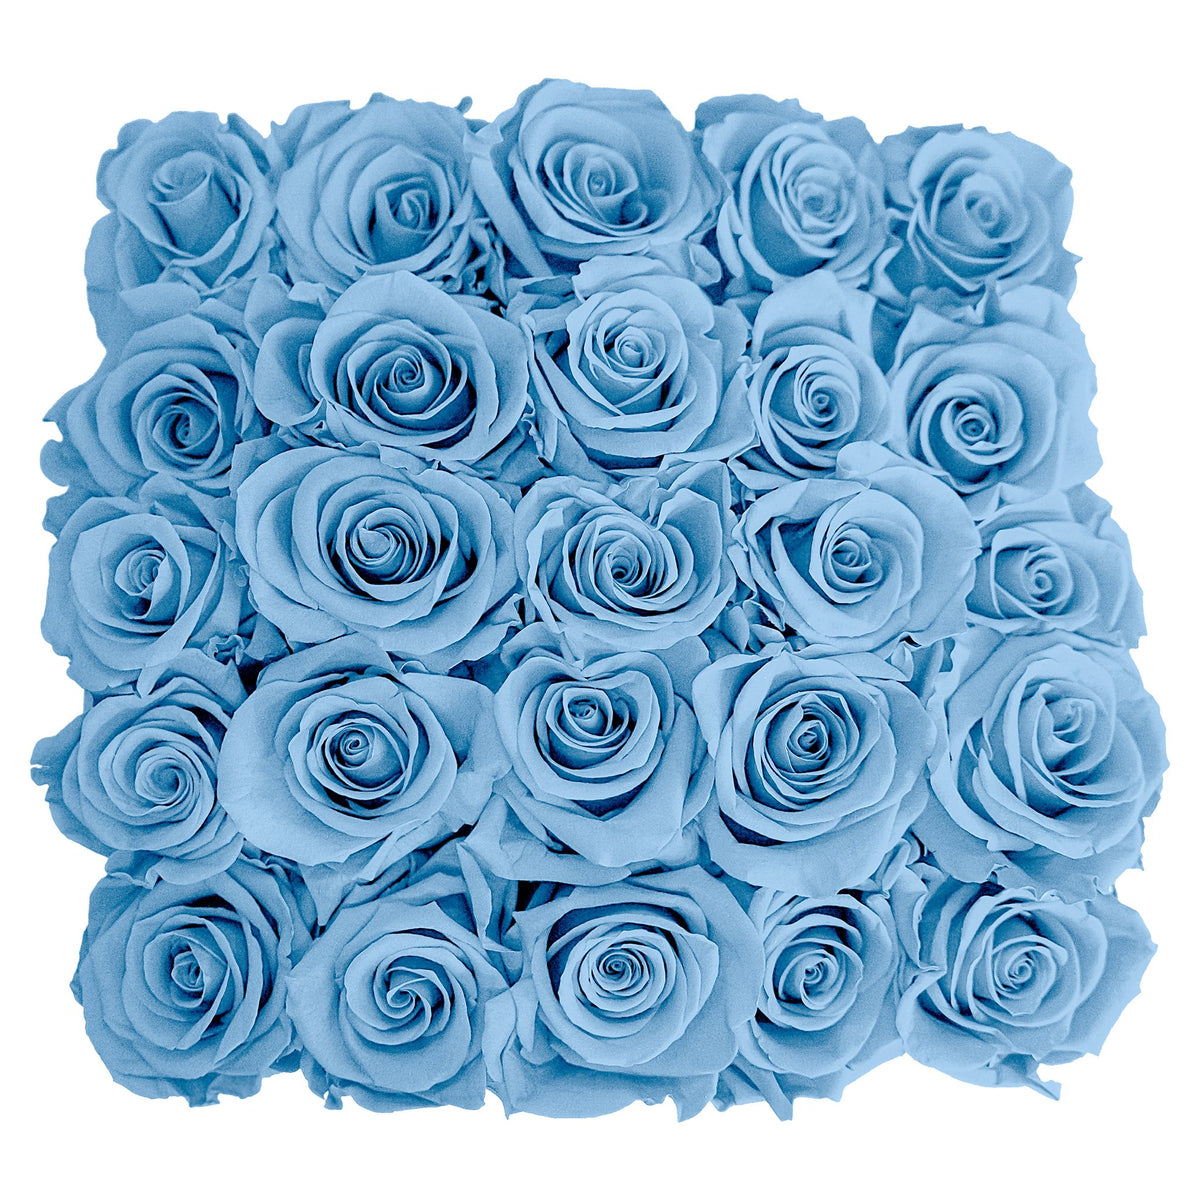 Preserved Roses Small Box | Light Blue - Roses